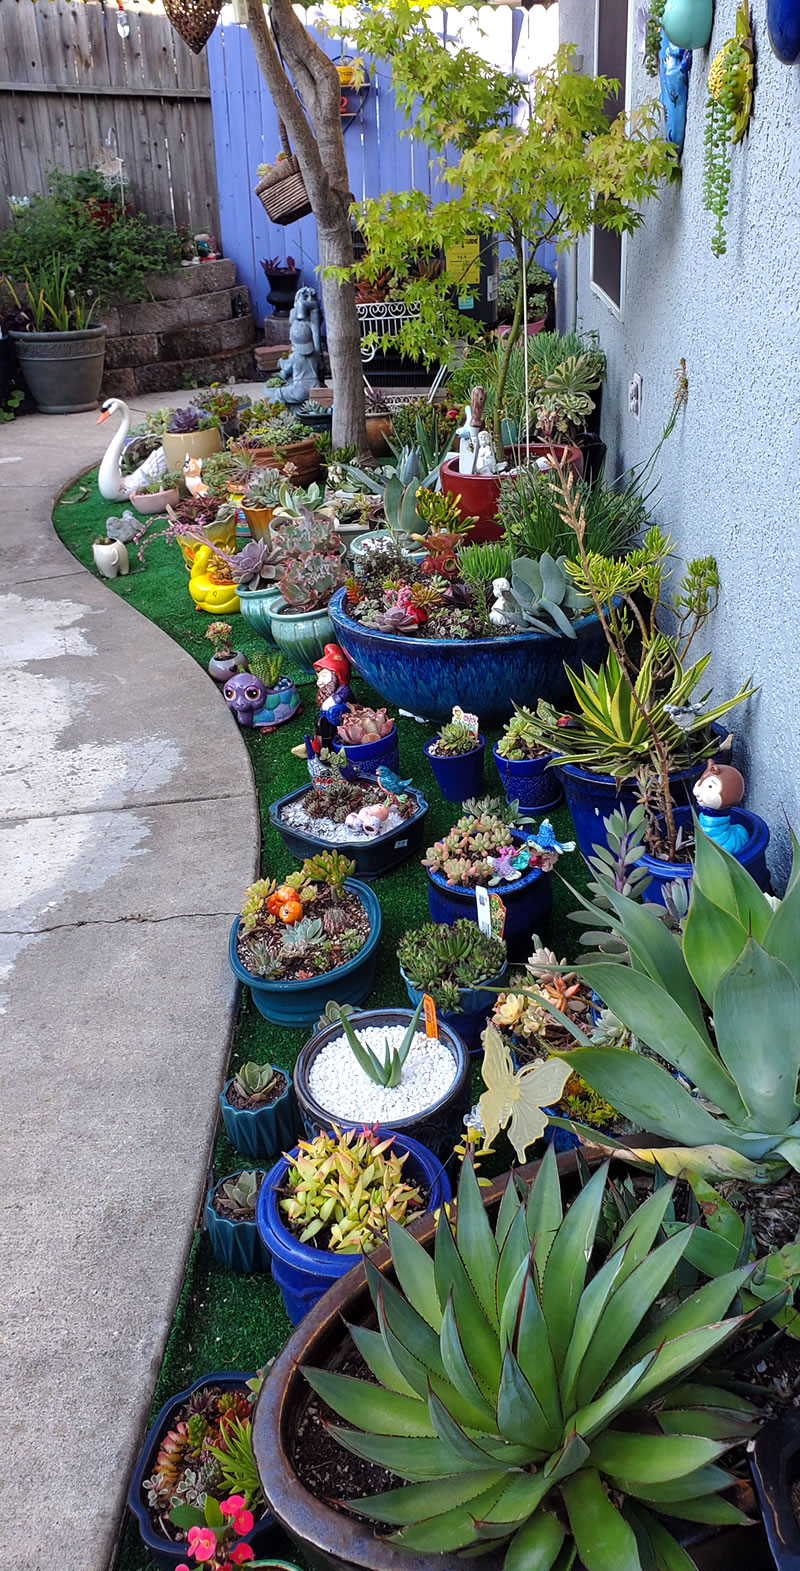 Backyard display of many succulents in a border along wall